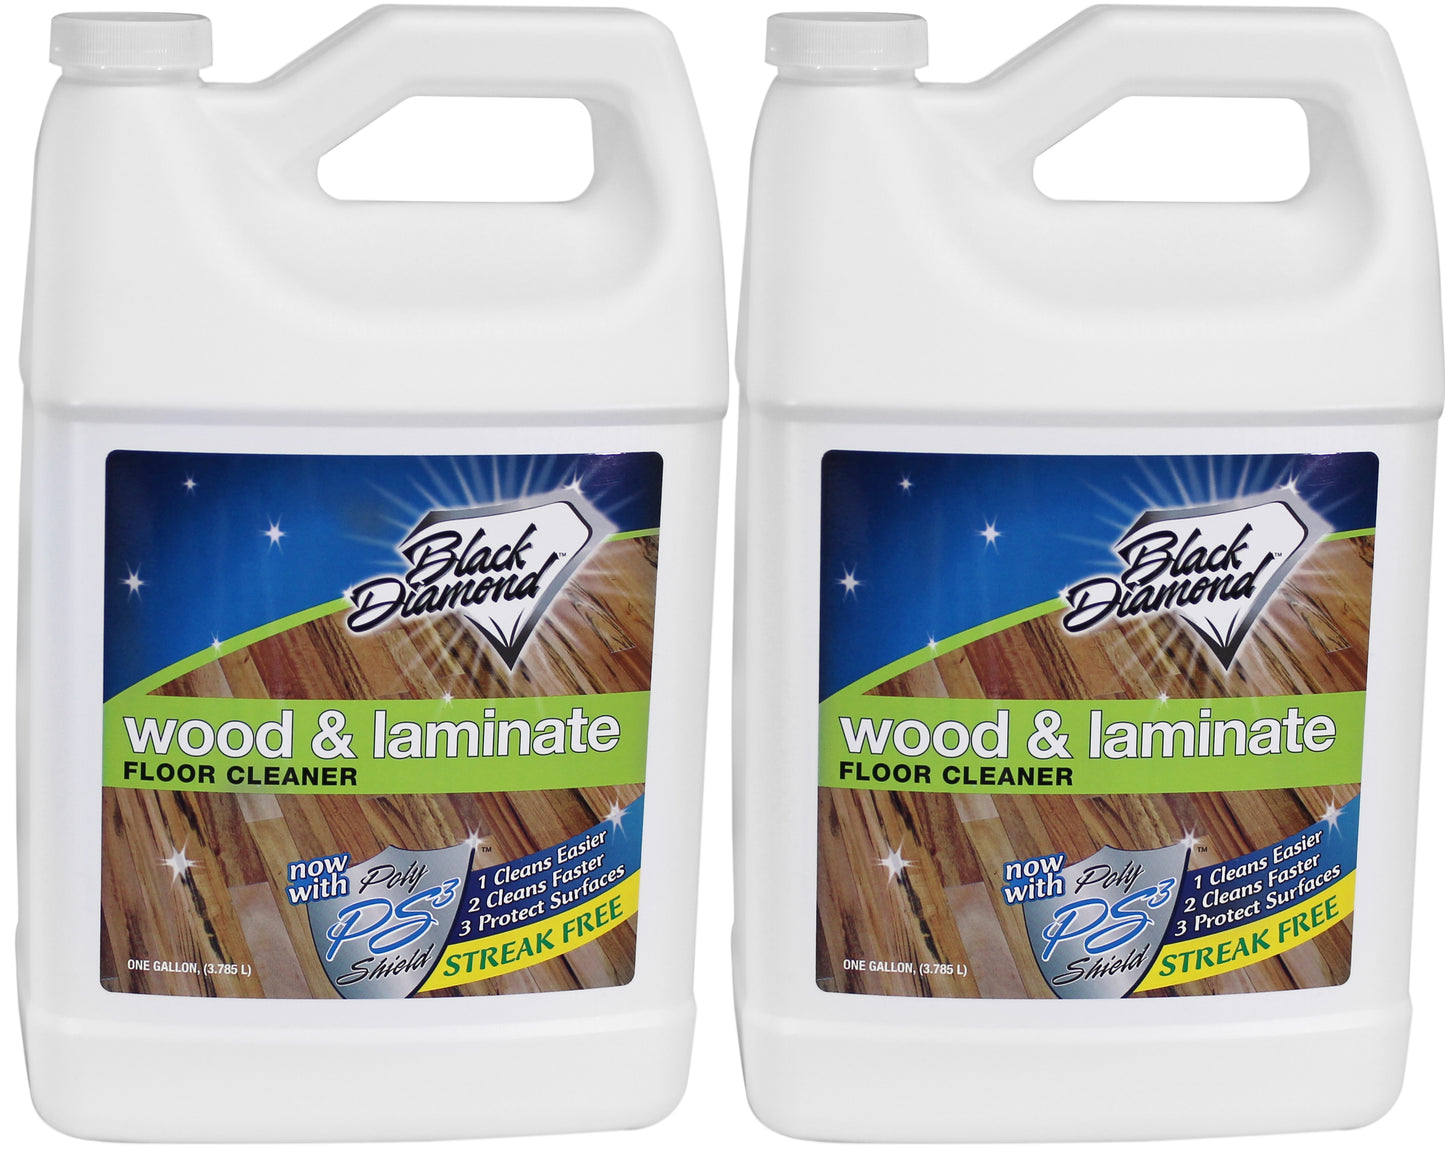 Wood & Laminate floor cleaner